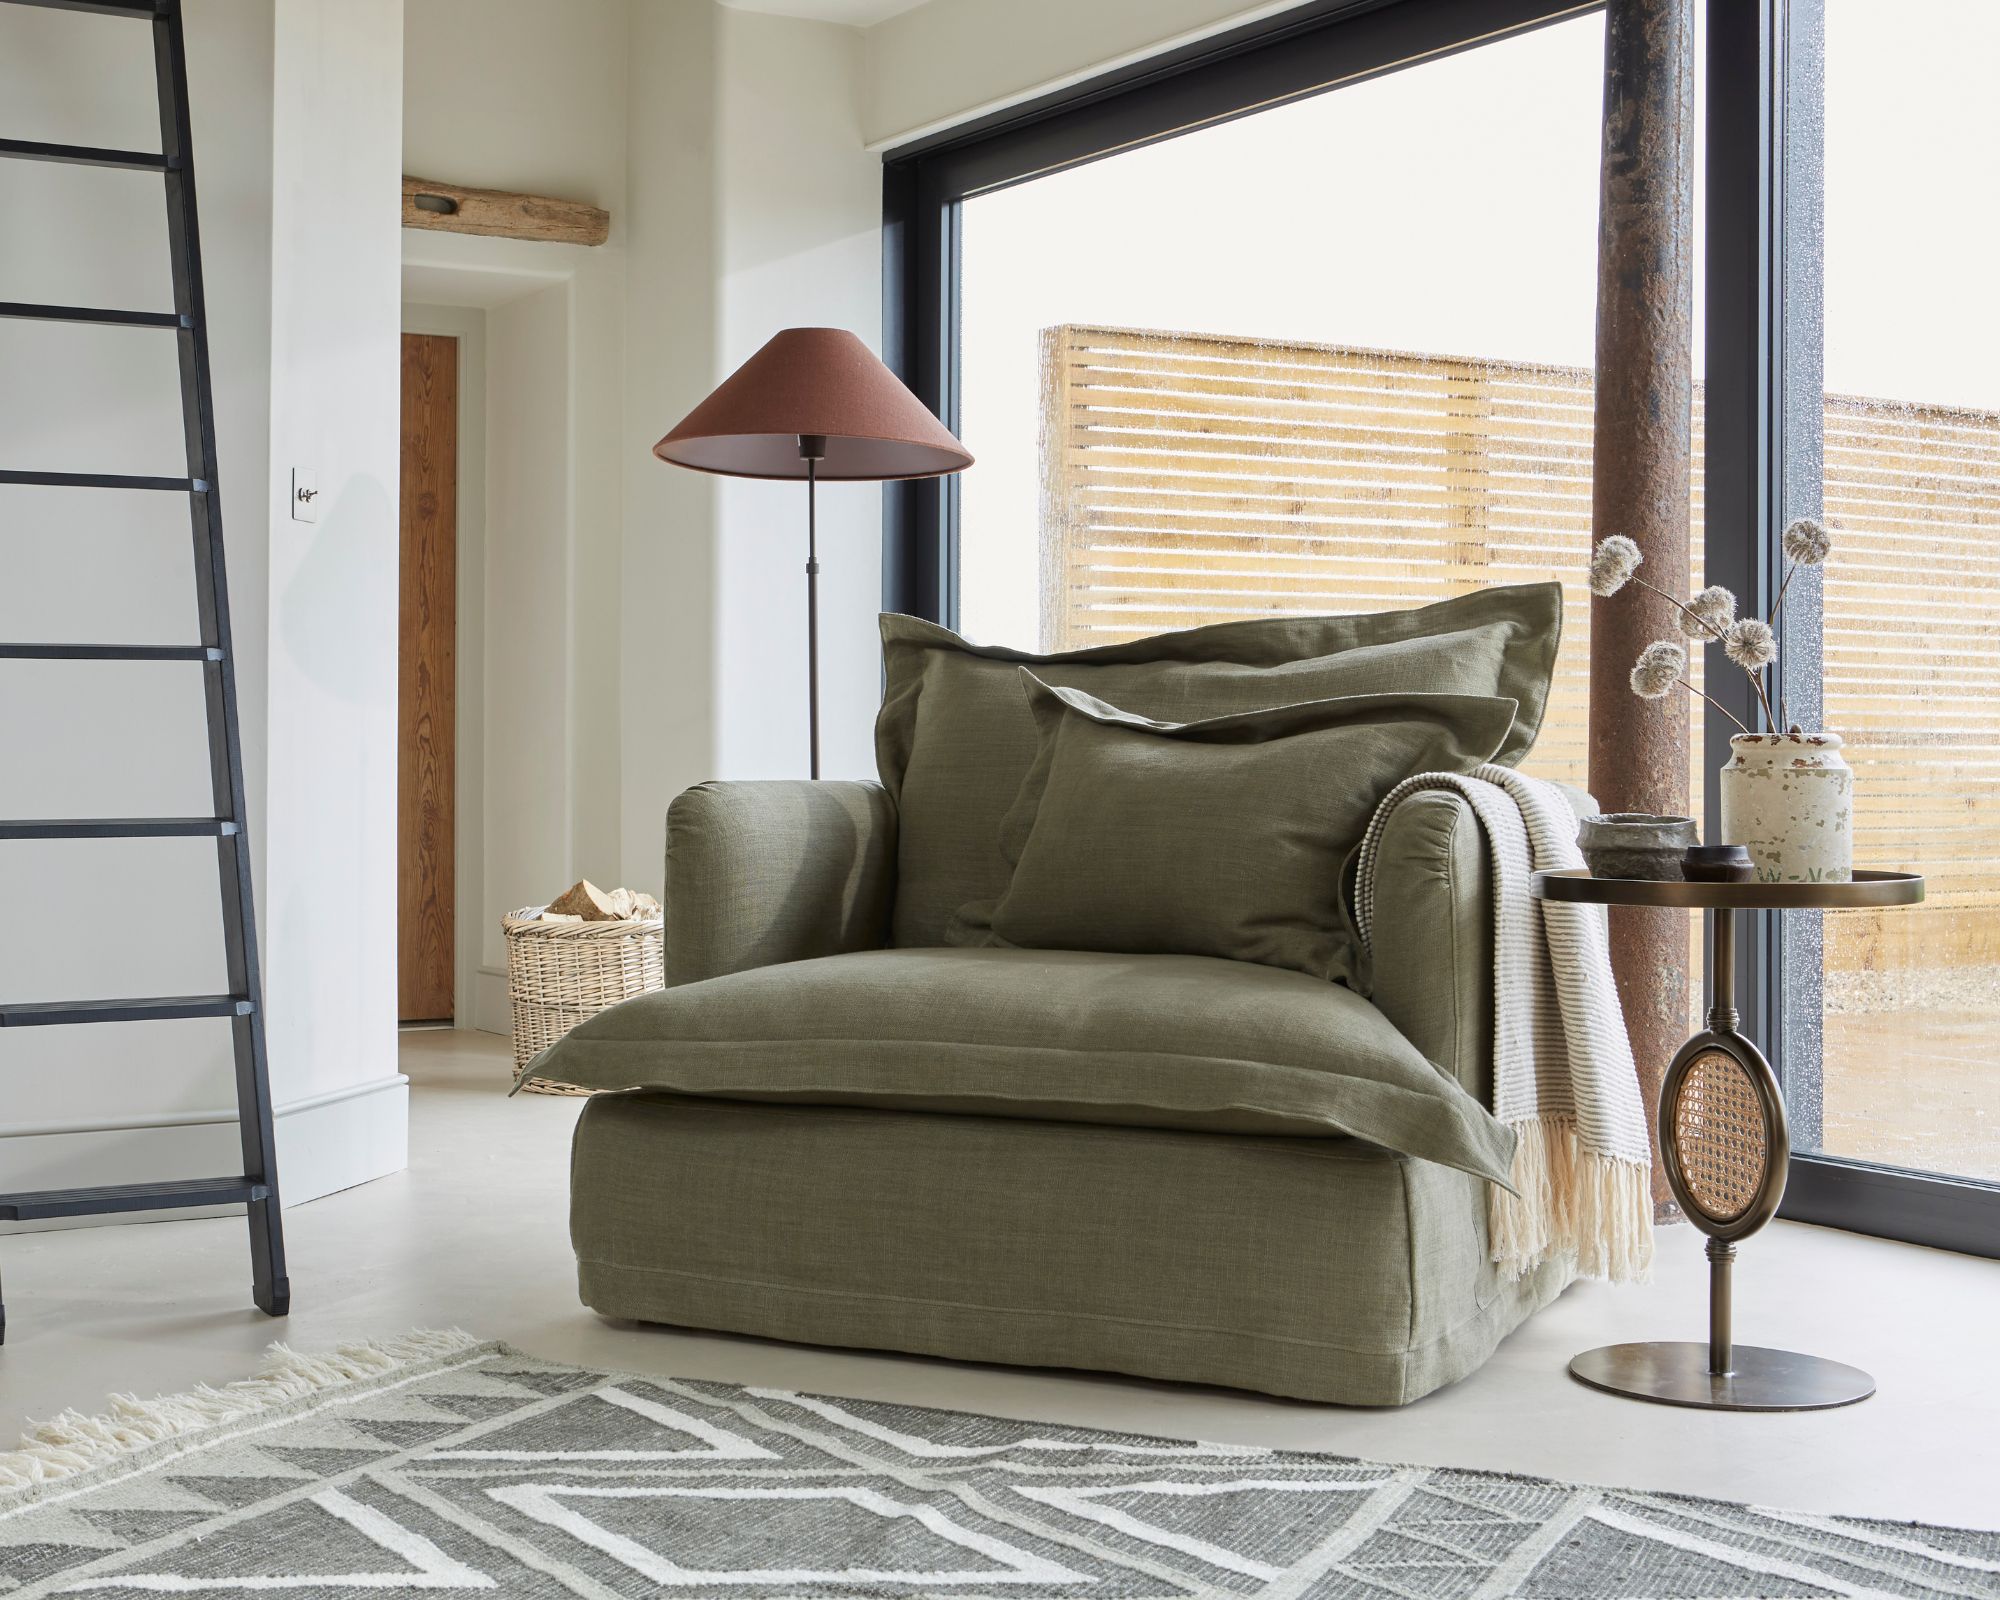 6 Tips to Fix Sagging Sofa Cushions